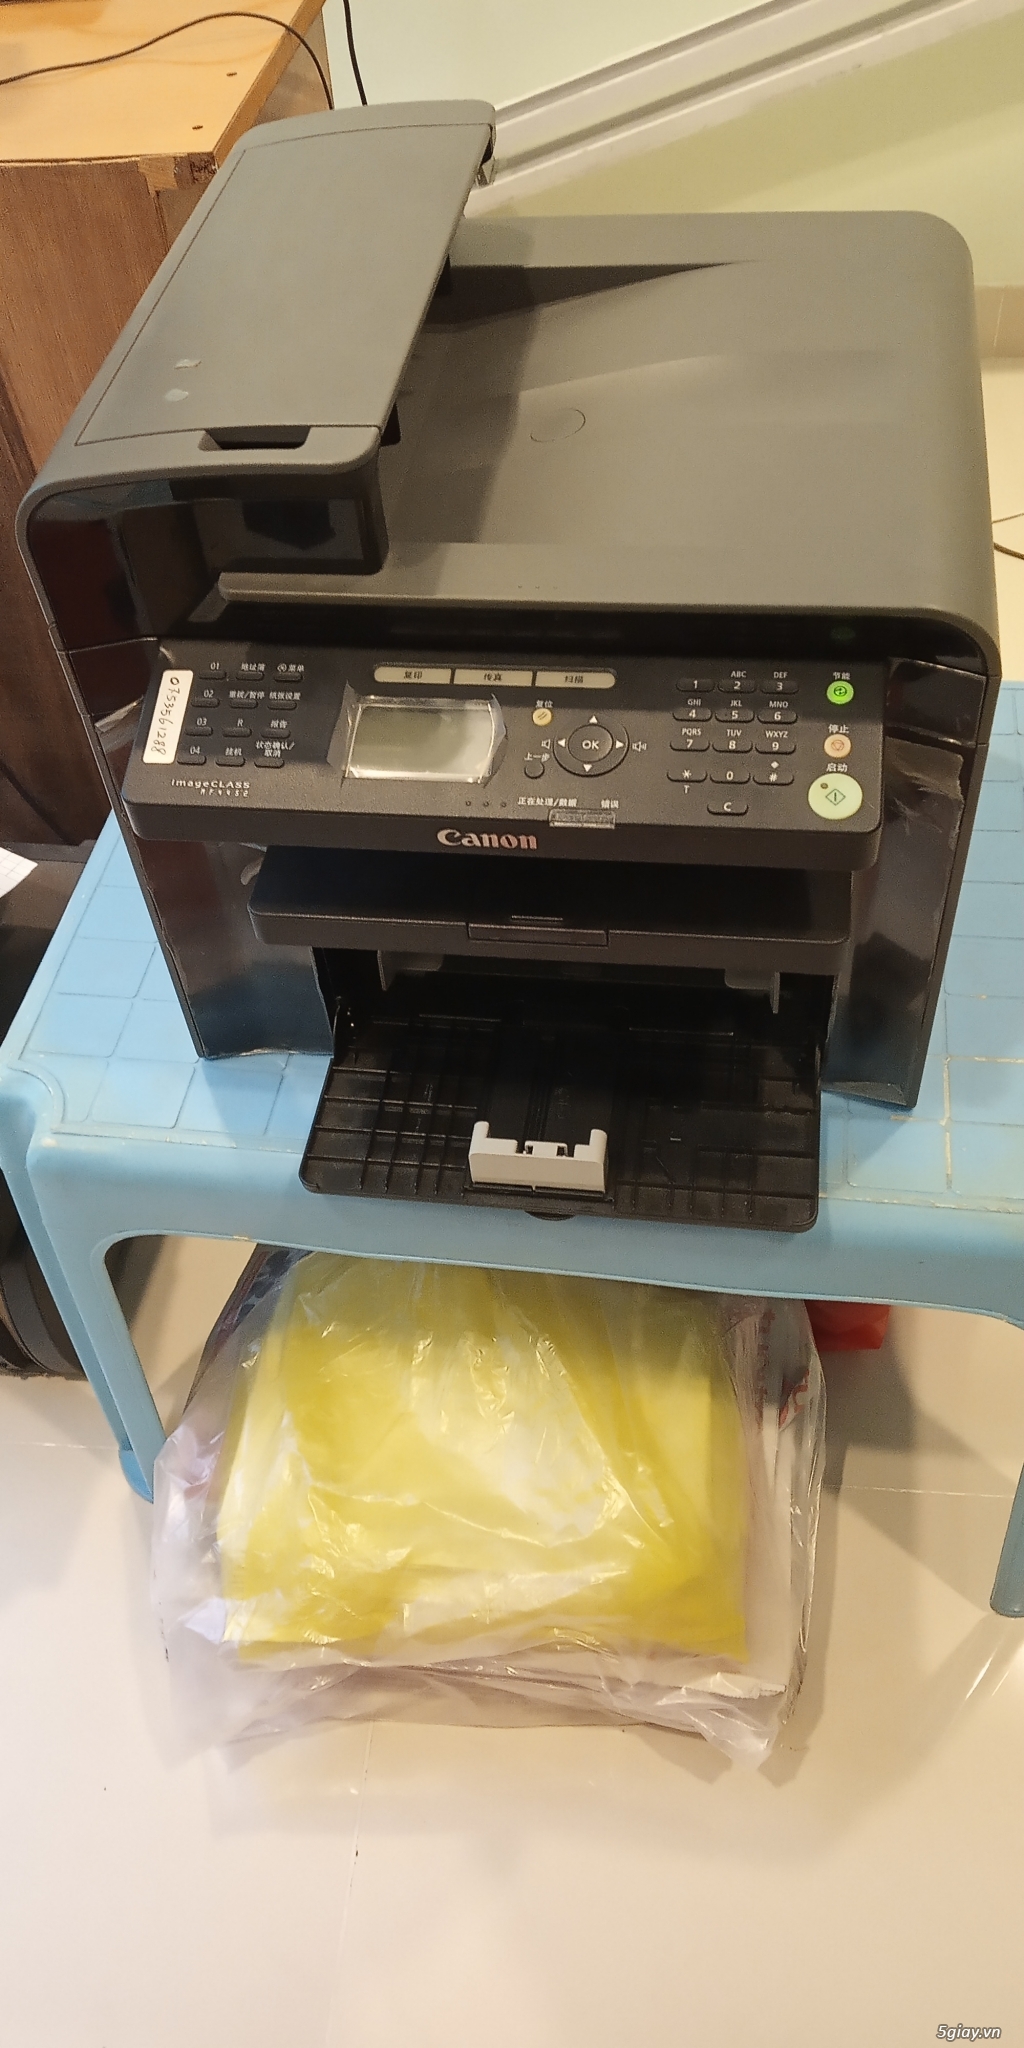 Cần bán 1 máy in CANON 4452 đa chức năng, Coppy, Scan, Fax, In, - 3